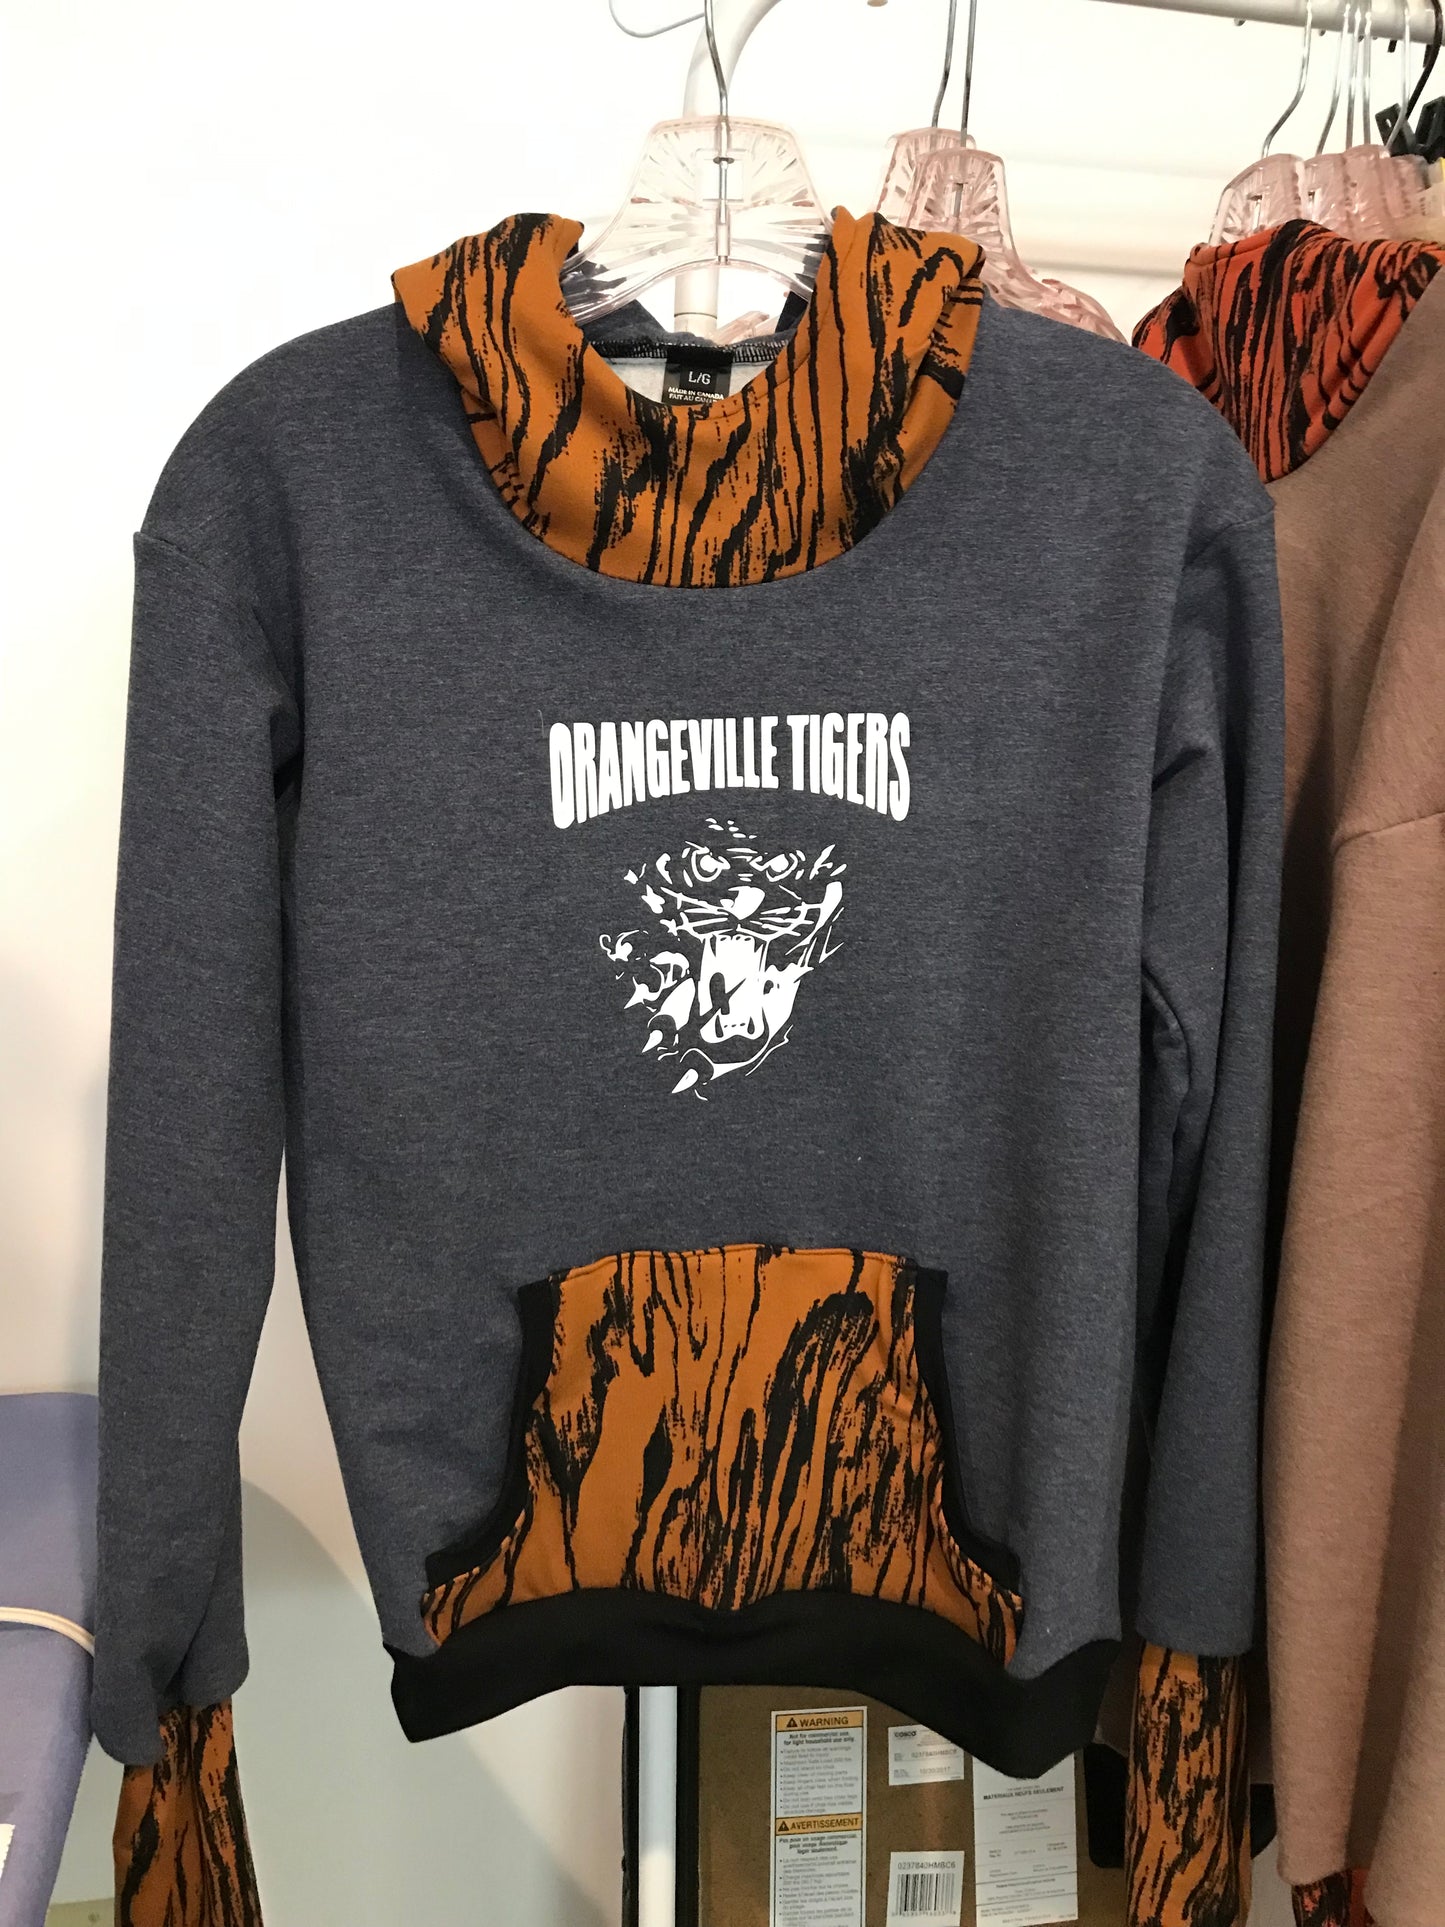 Orangeville tigers hockey Hoodies - handmade local in Bamboo knit